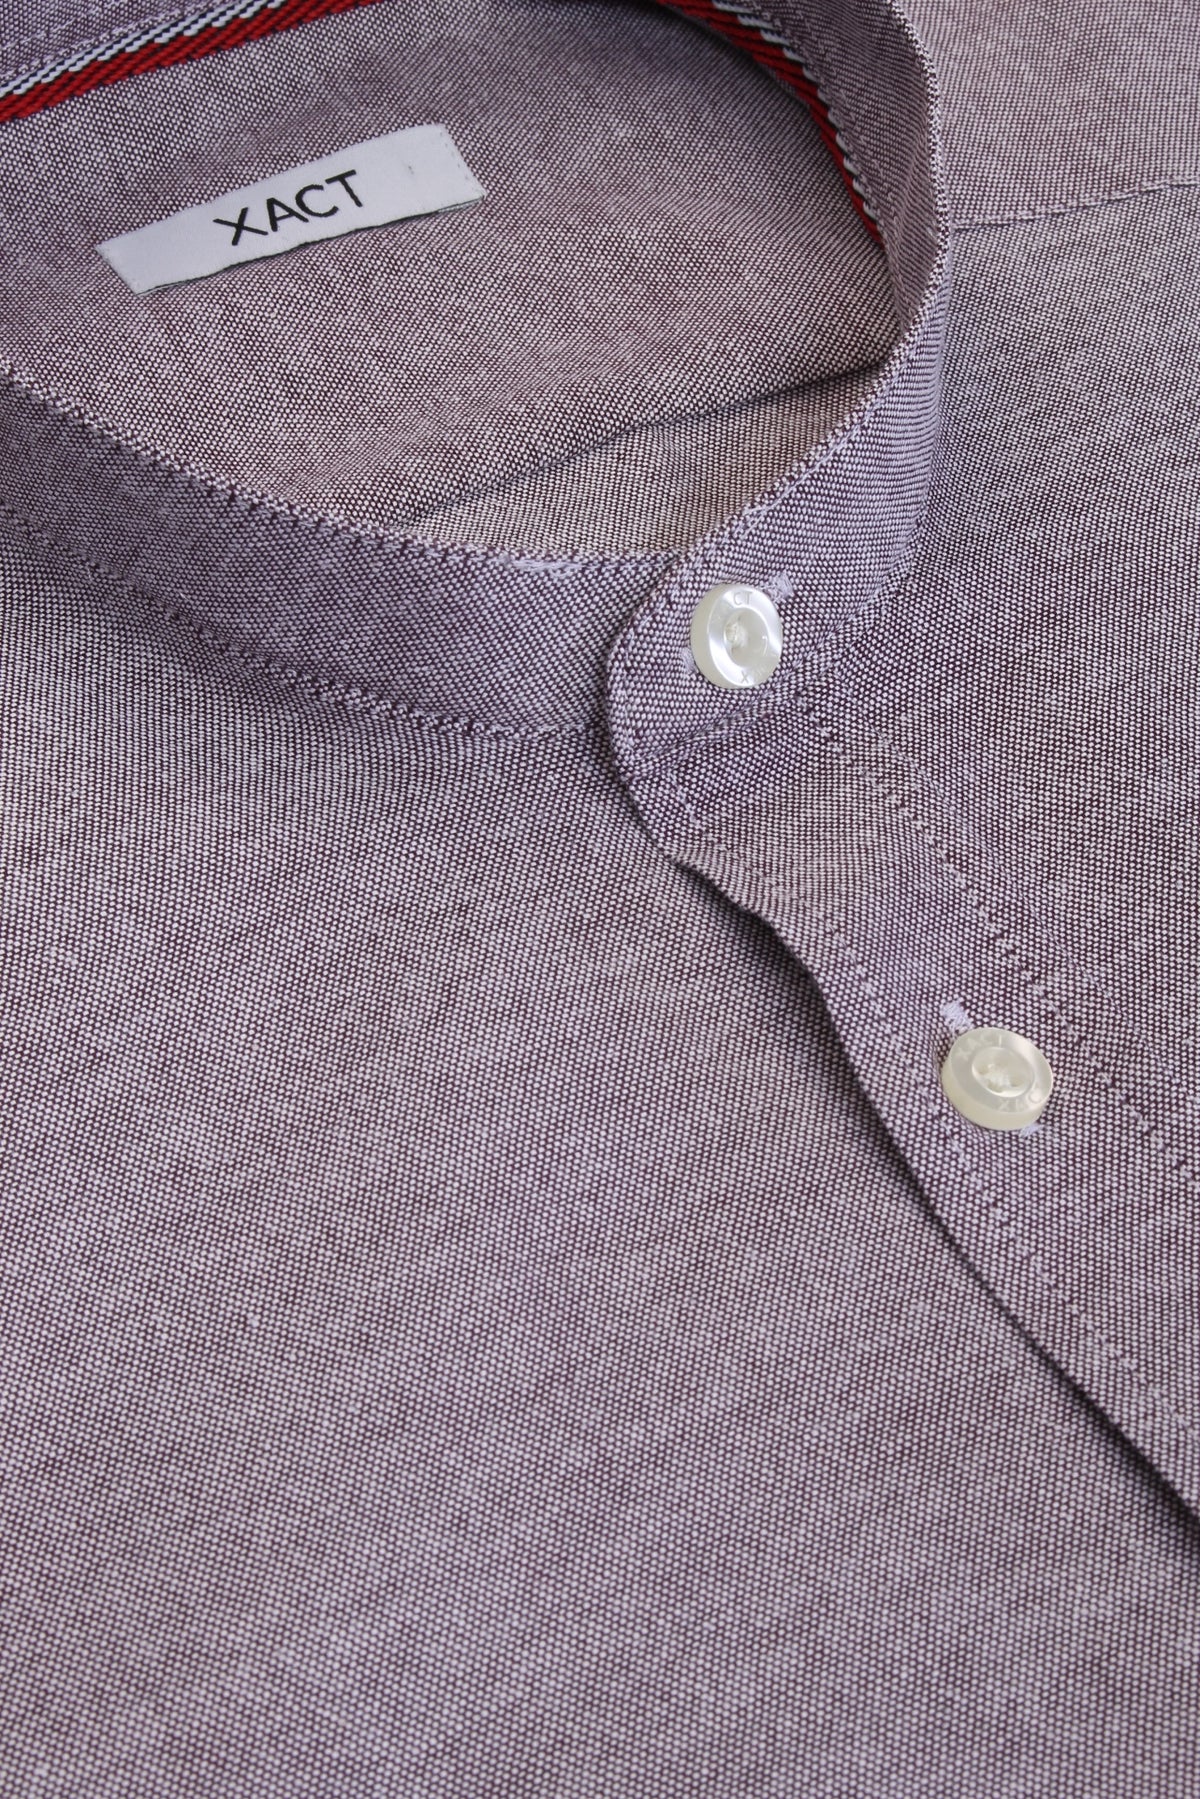 Xact Men's Grandad Collar Oxford Shirt Slim Fit Short Sleeved, 04, Xsh1022, Light Burgundy